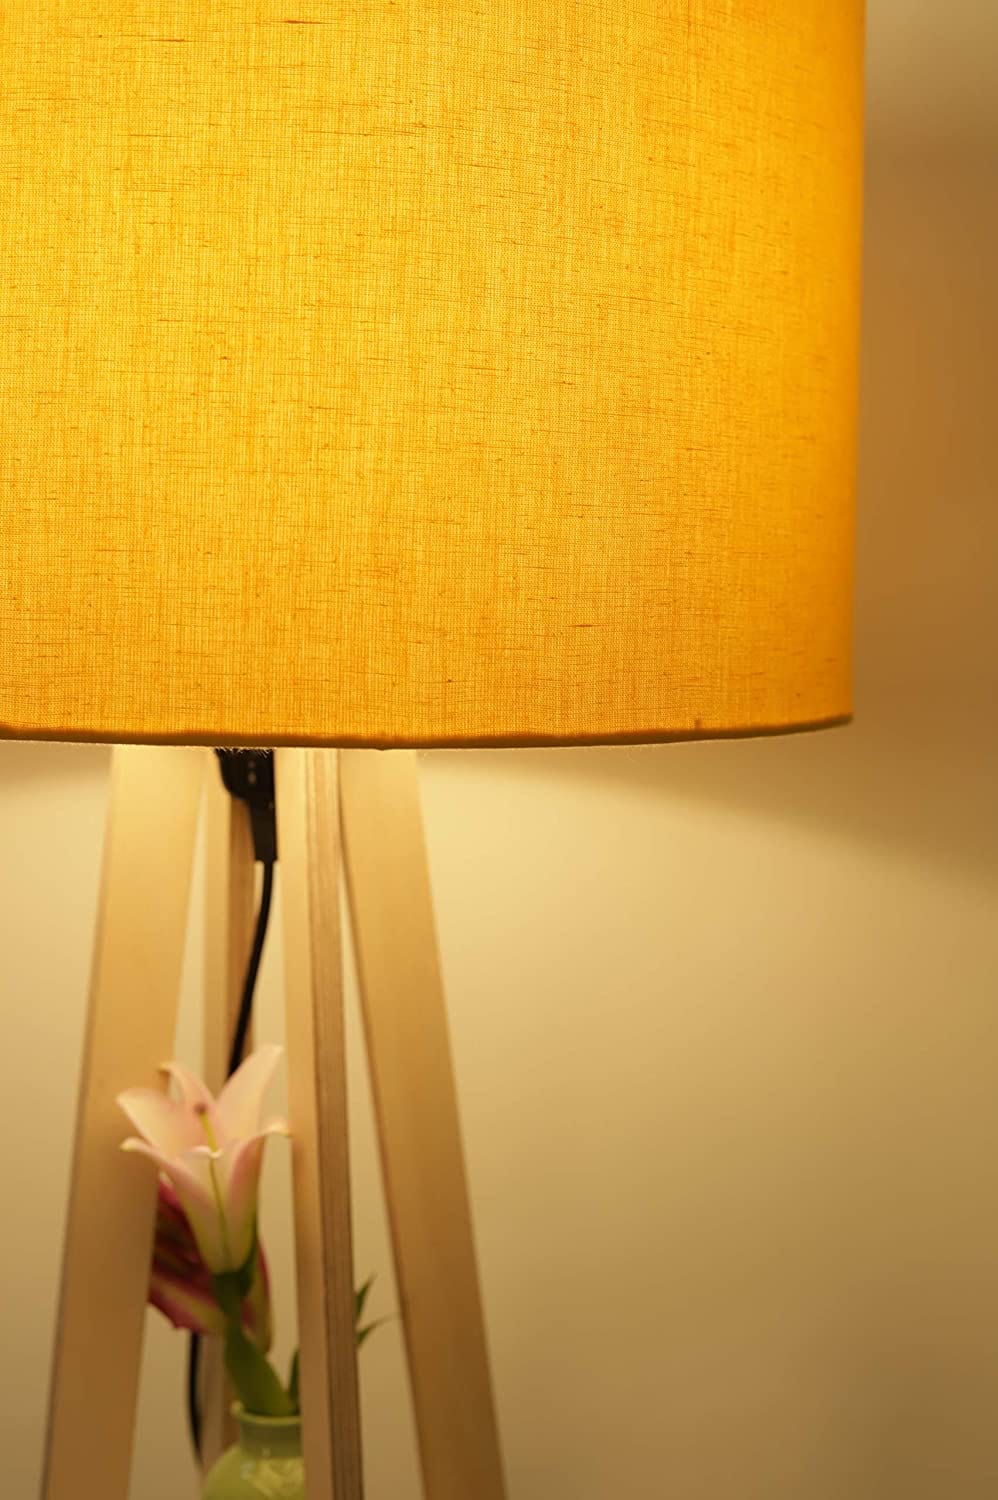 Premium Birch Plywood Floor Lamp with Shelf (Yellow Shade)